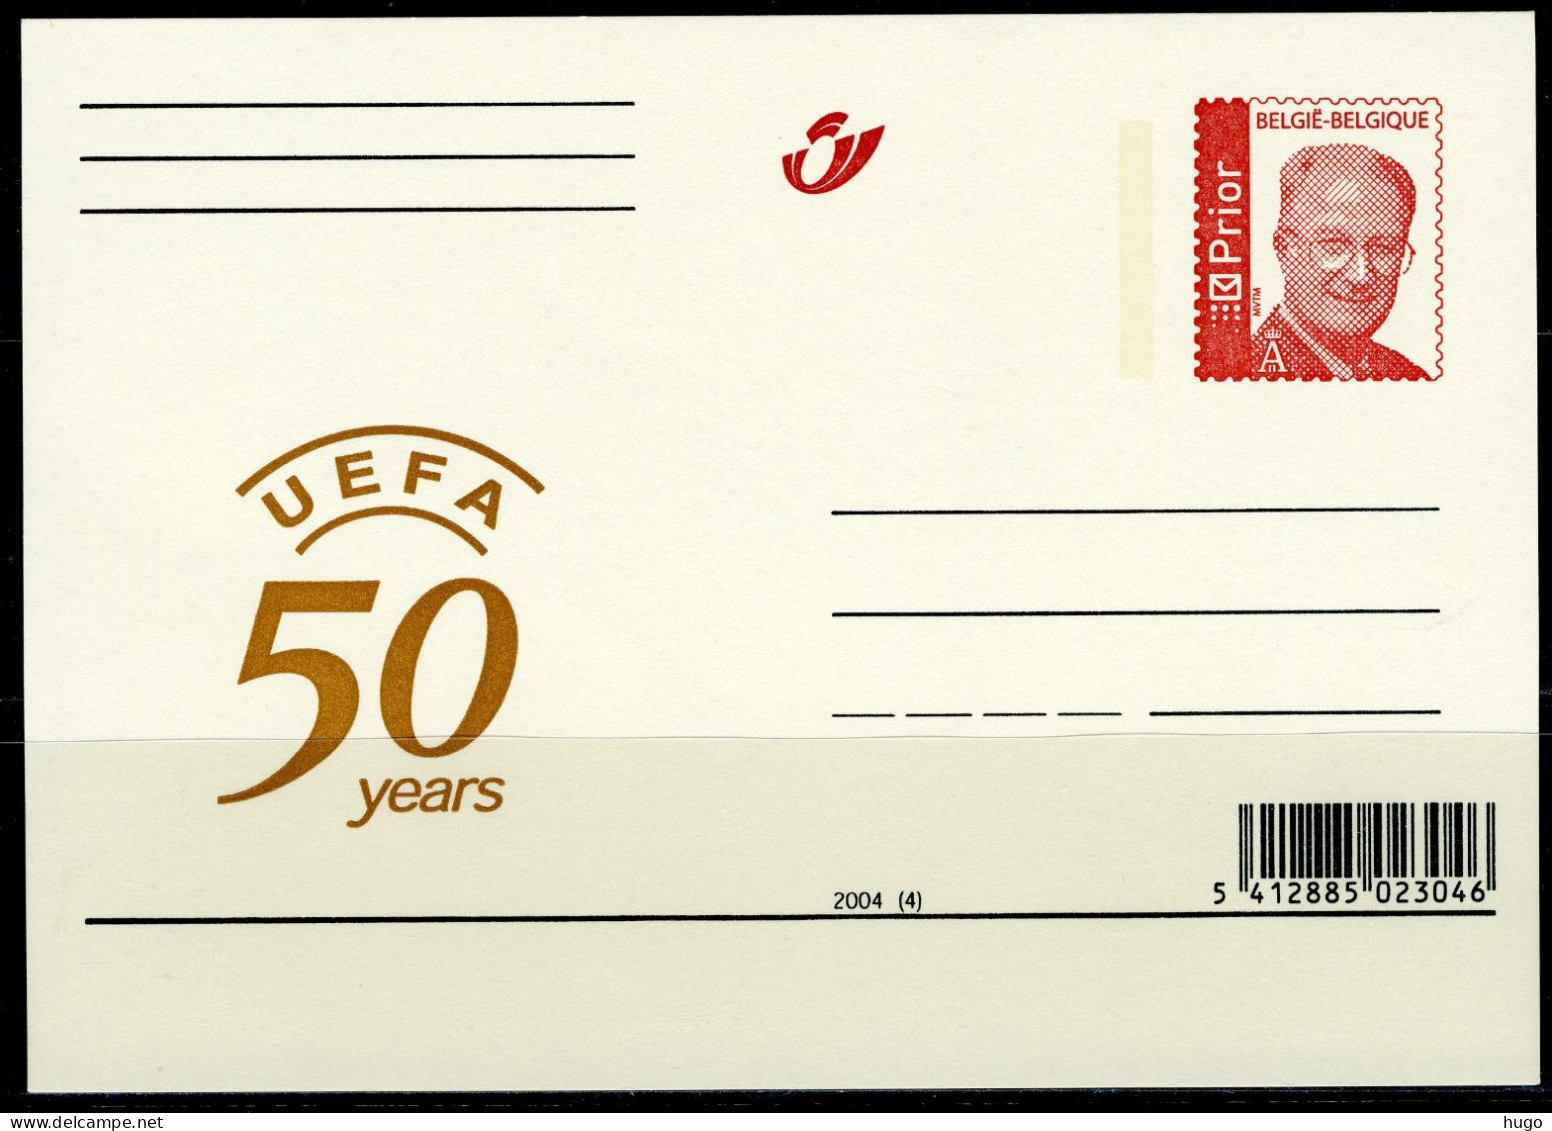 (B) België Briefkaart  2004(4) - UEFA 50 Years - Cartes Postales Illustrées (1971-2014) [BK]